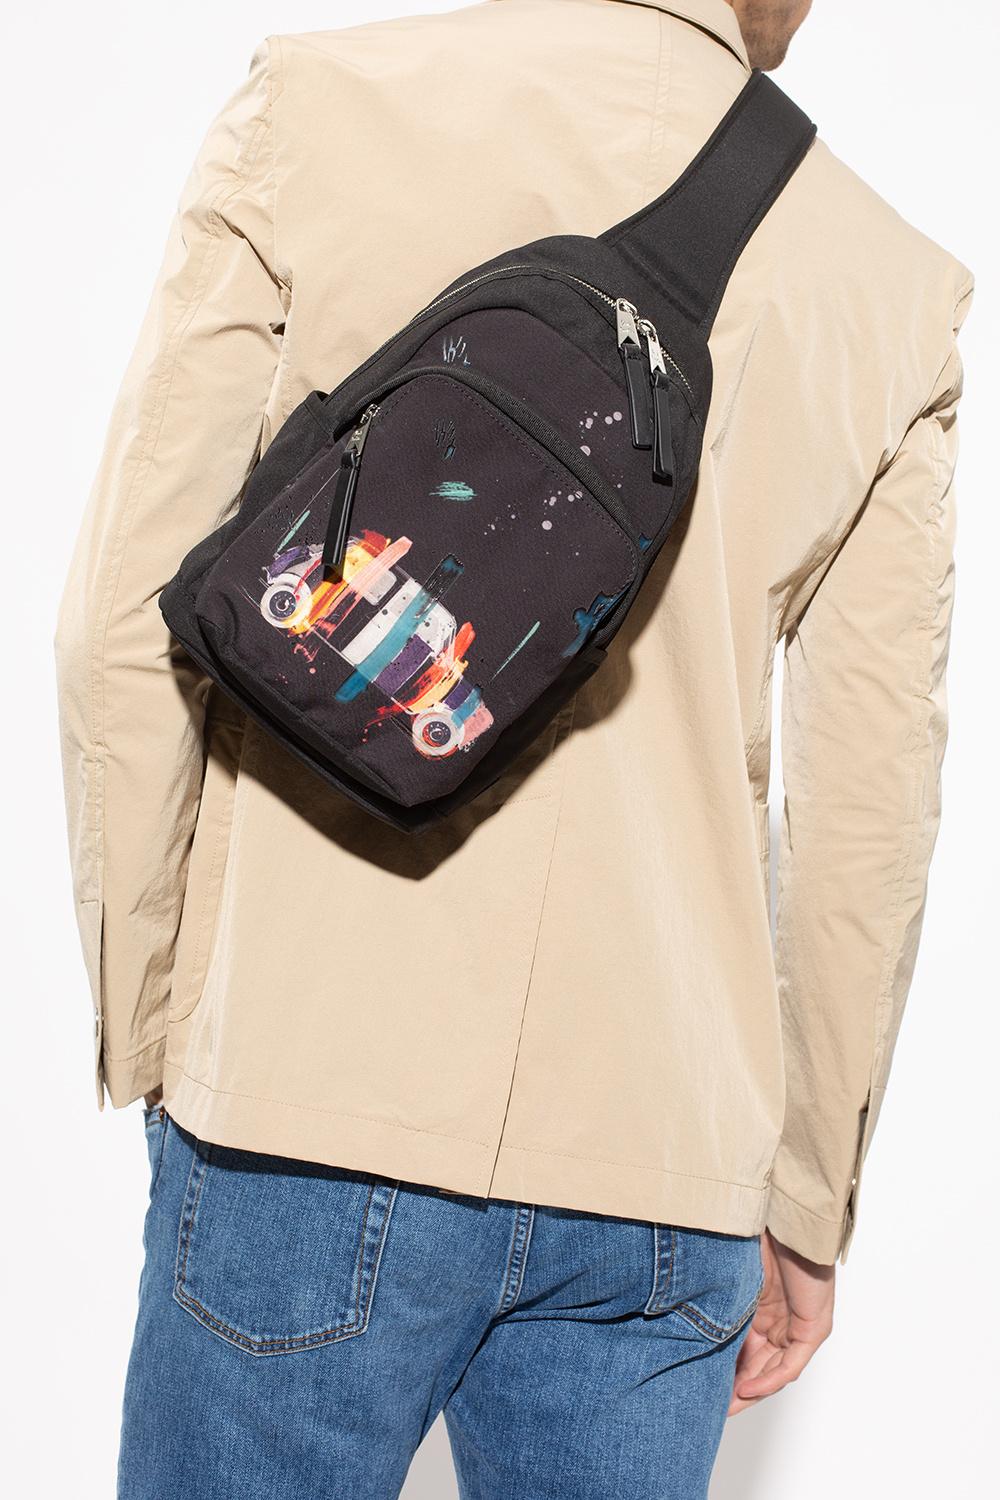 Paul Smith 'sling Mini' One-shoulder Backpack in Black for Men | Lyst